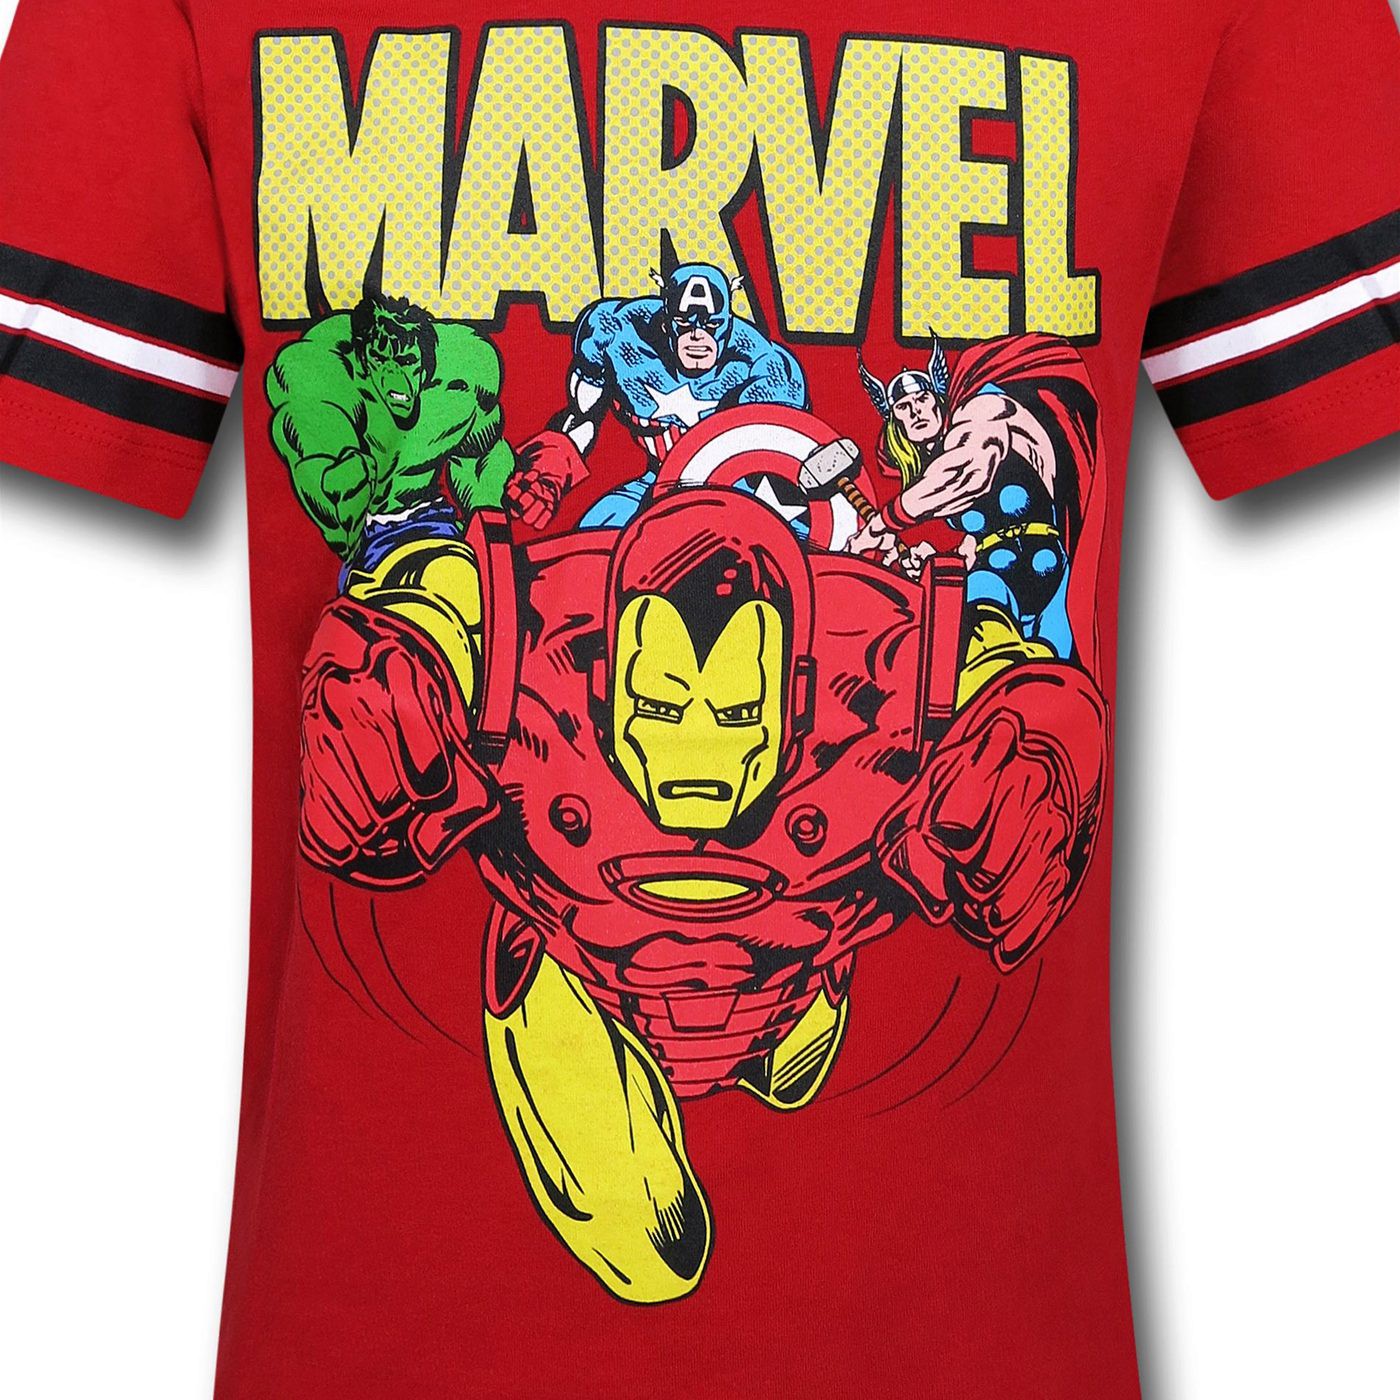 Marvel Retro Heroes Ready Girls Kids T-Shirt